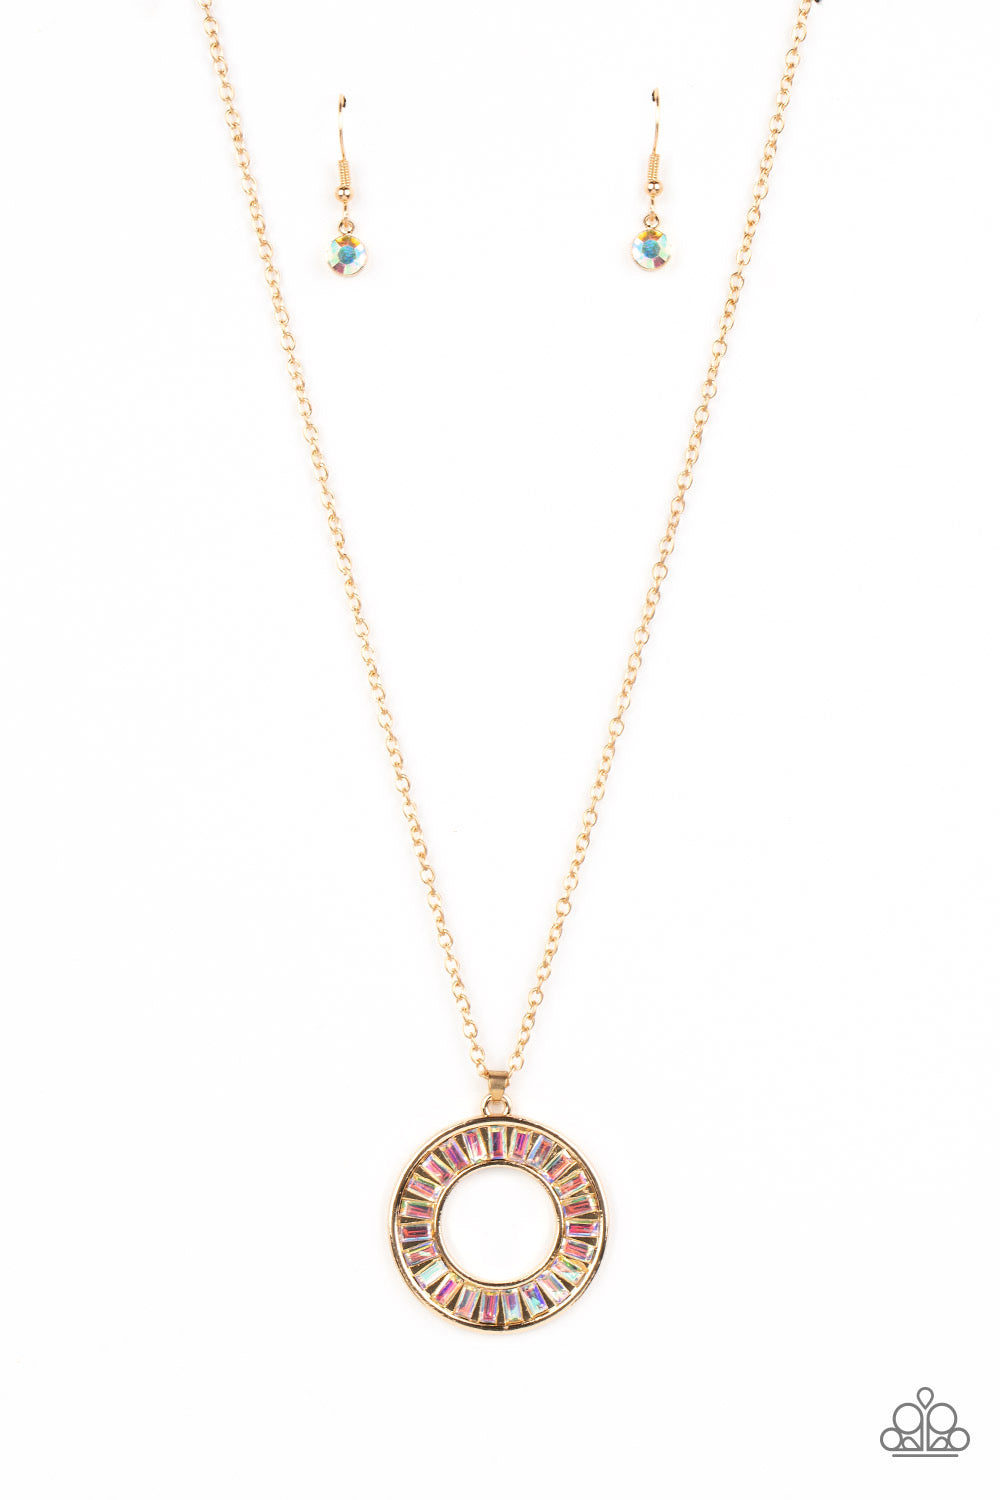 Paparazzi Clique Couture - Gold Necklace -Paparazzi Jewelry Images